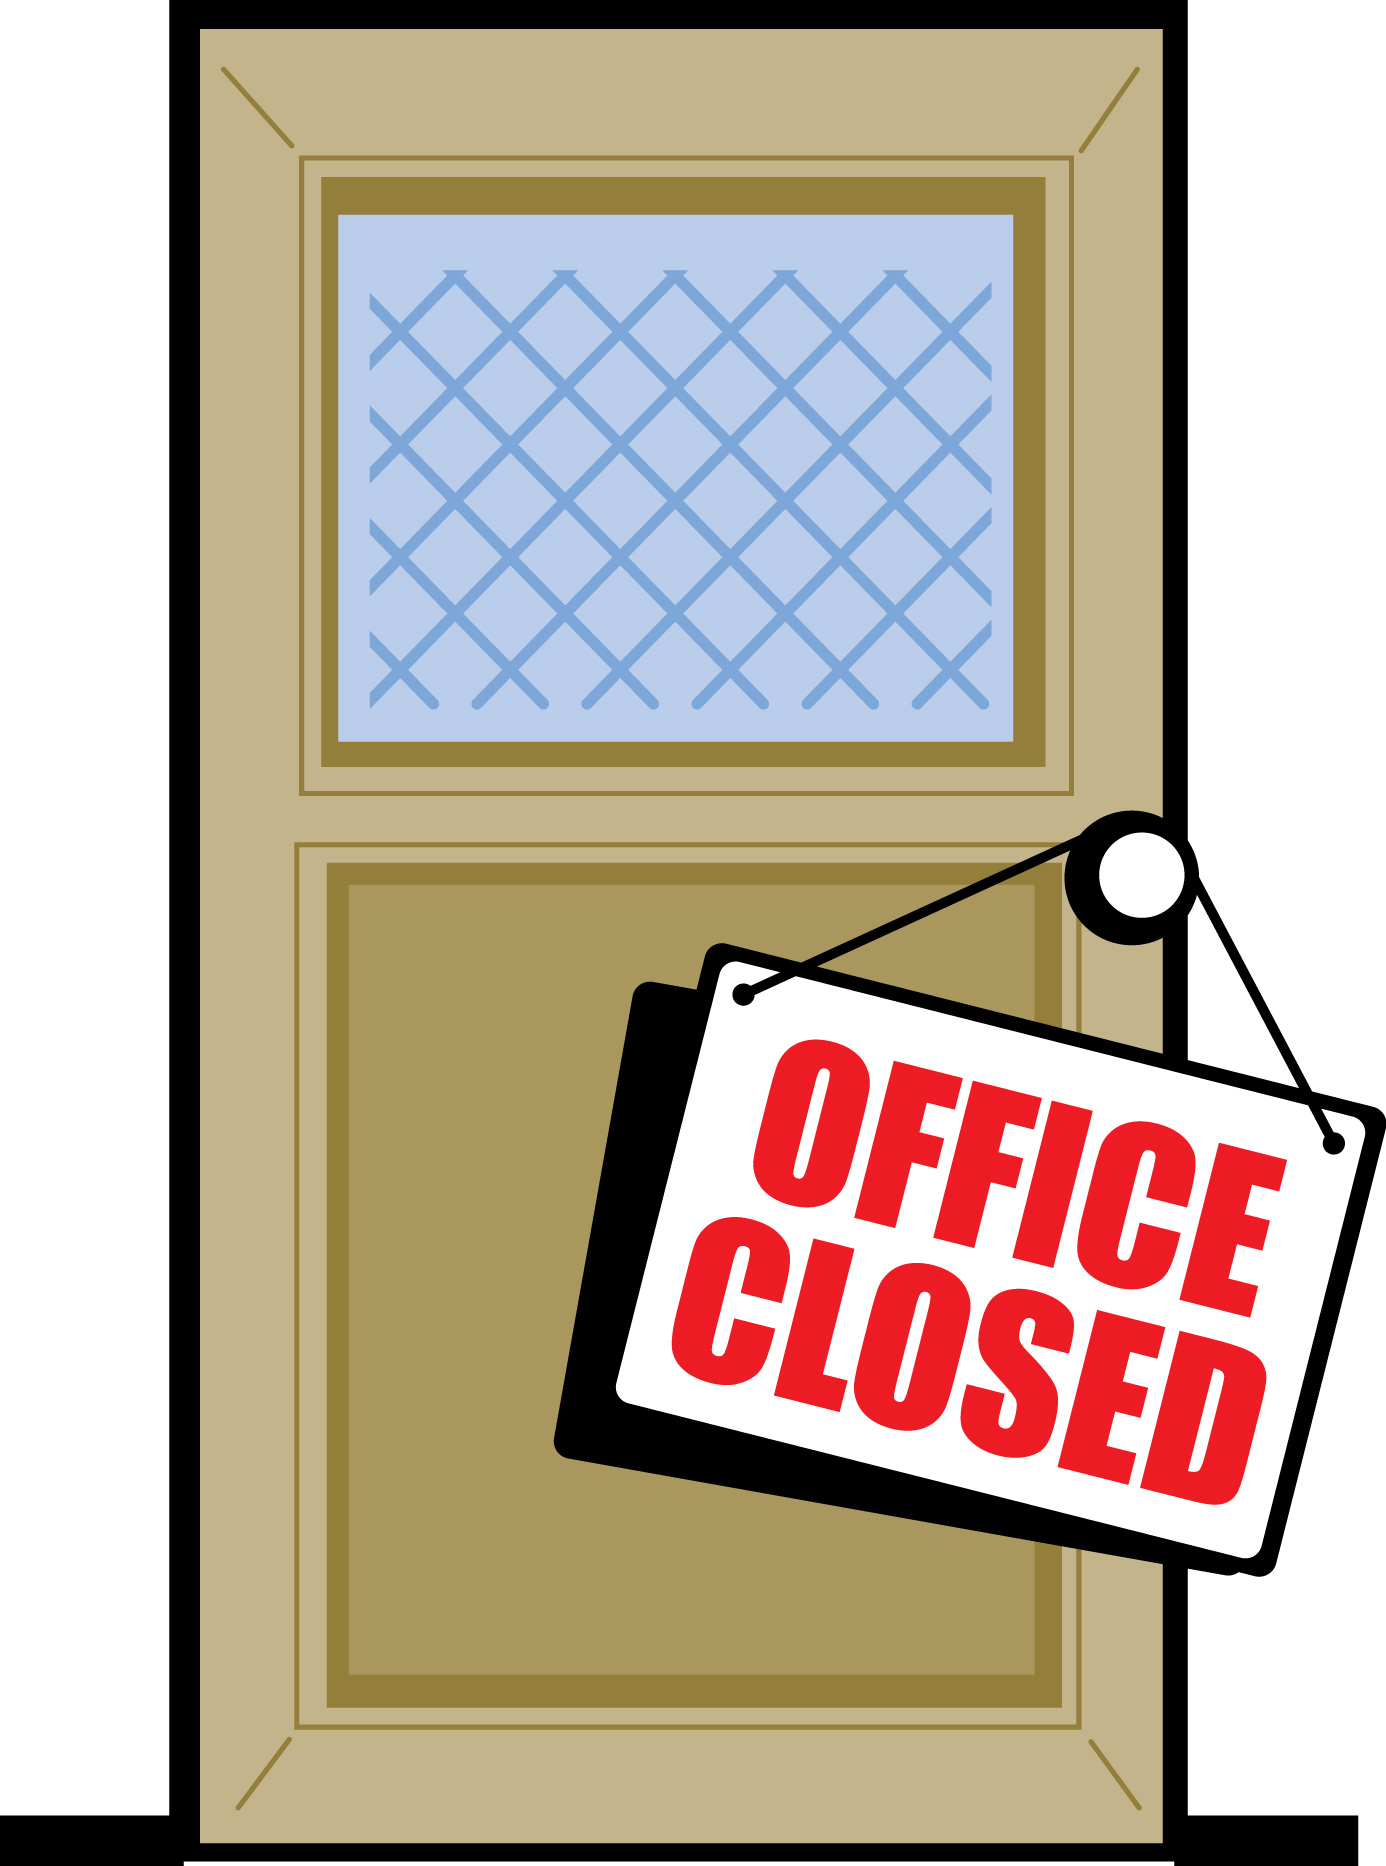 School Office Closed